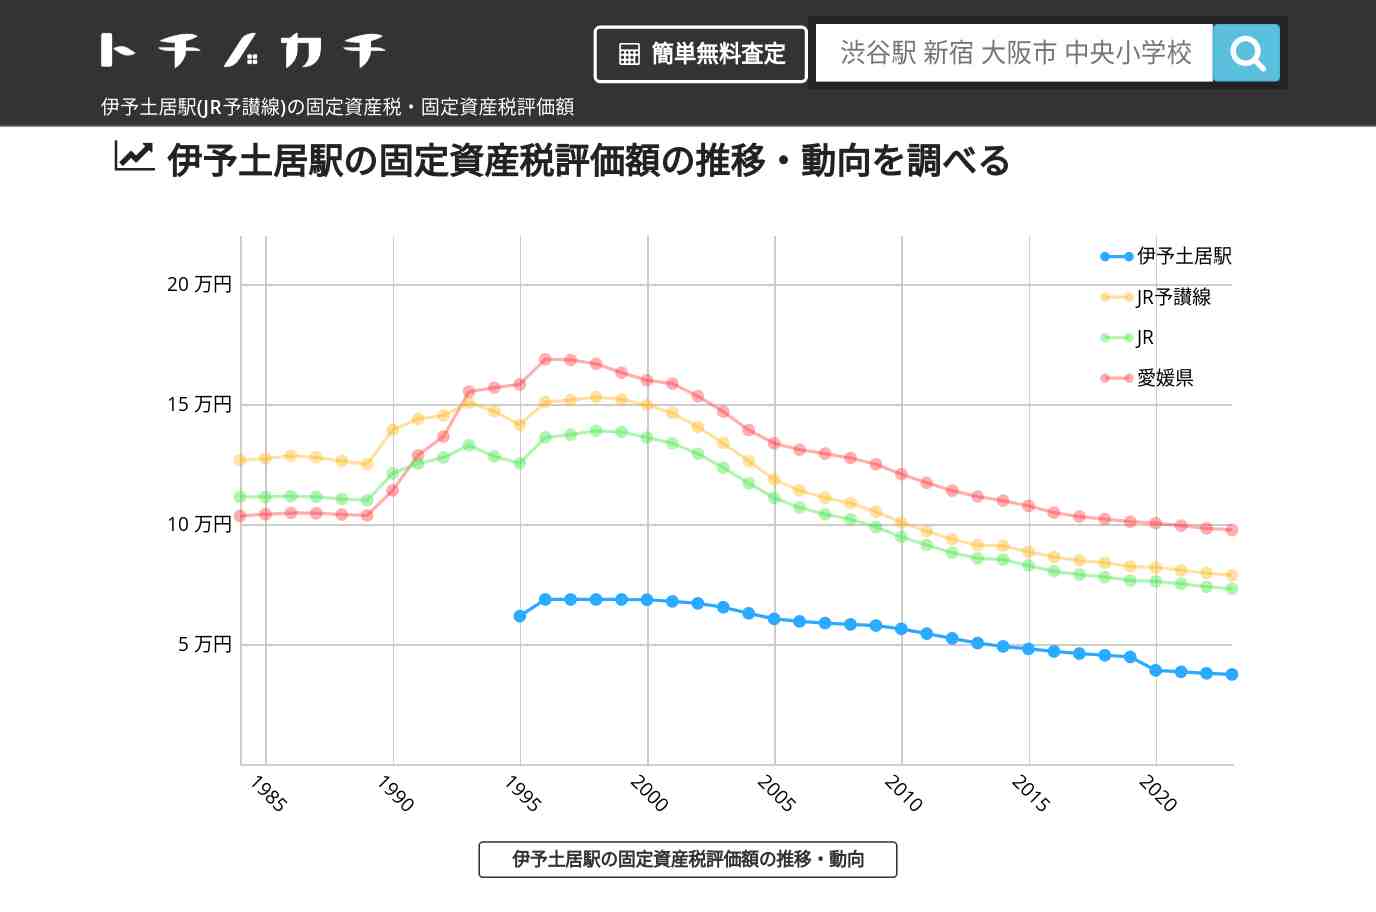 伊予土居駅(JR予讃線)の固定資産税・固定資産税評価額 | トチノカチ